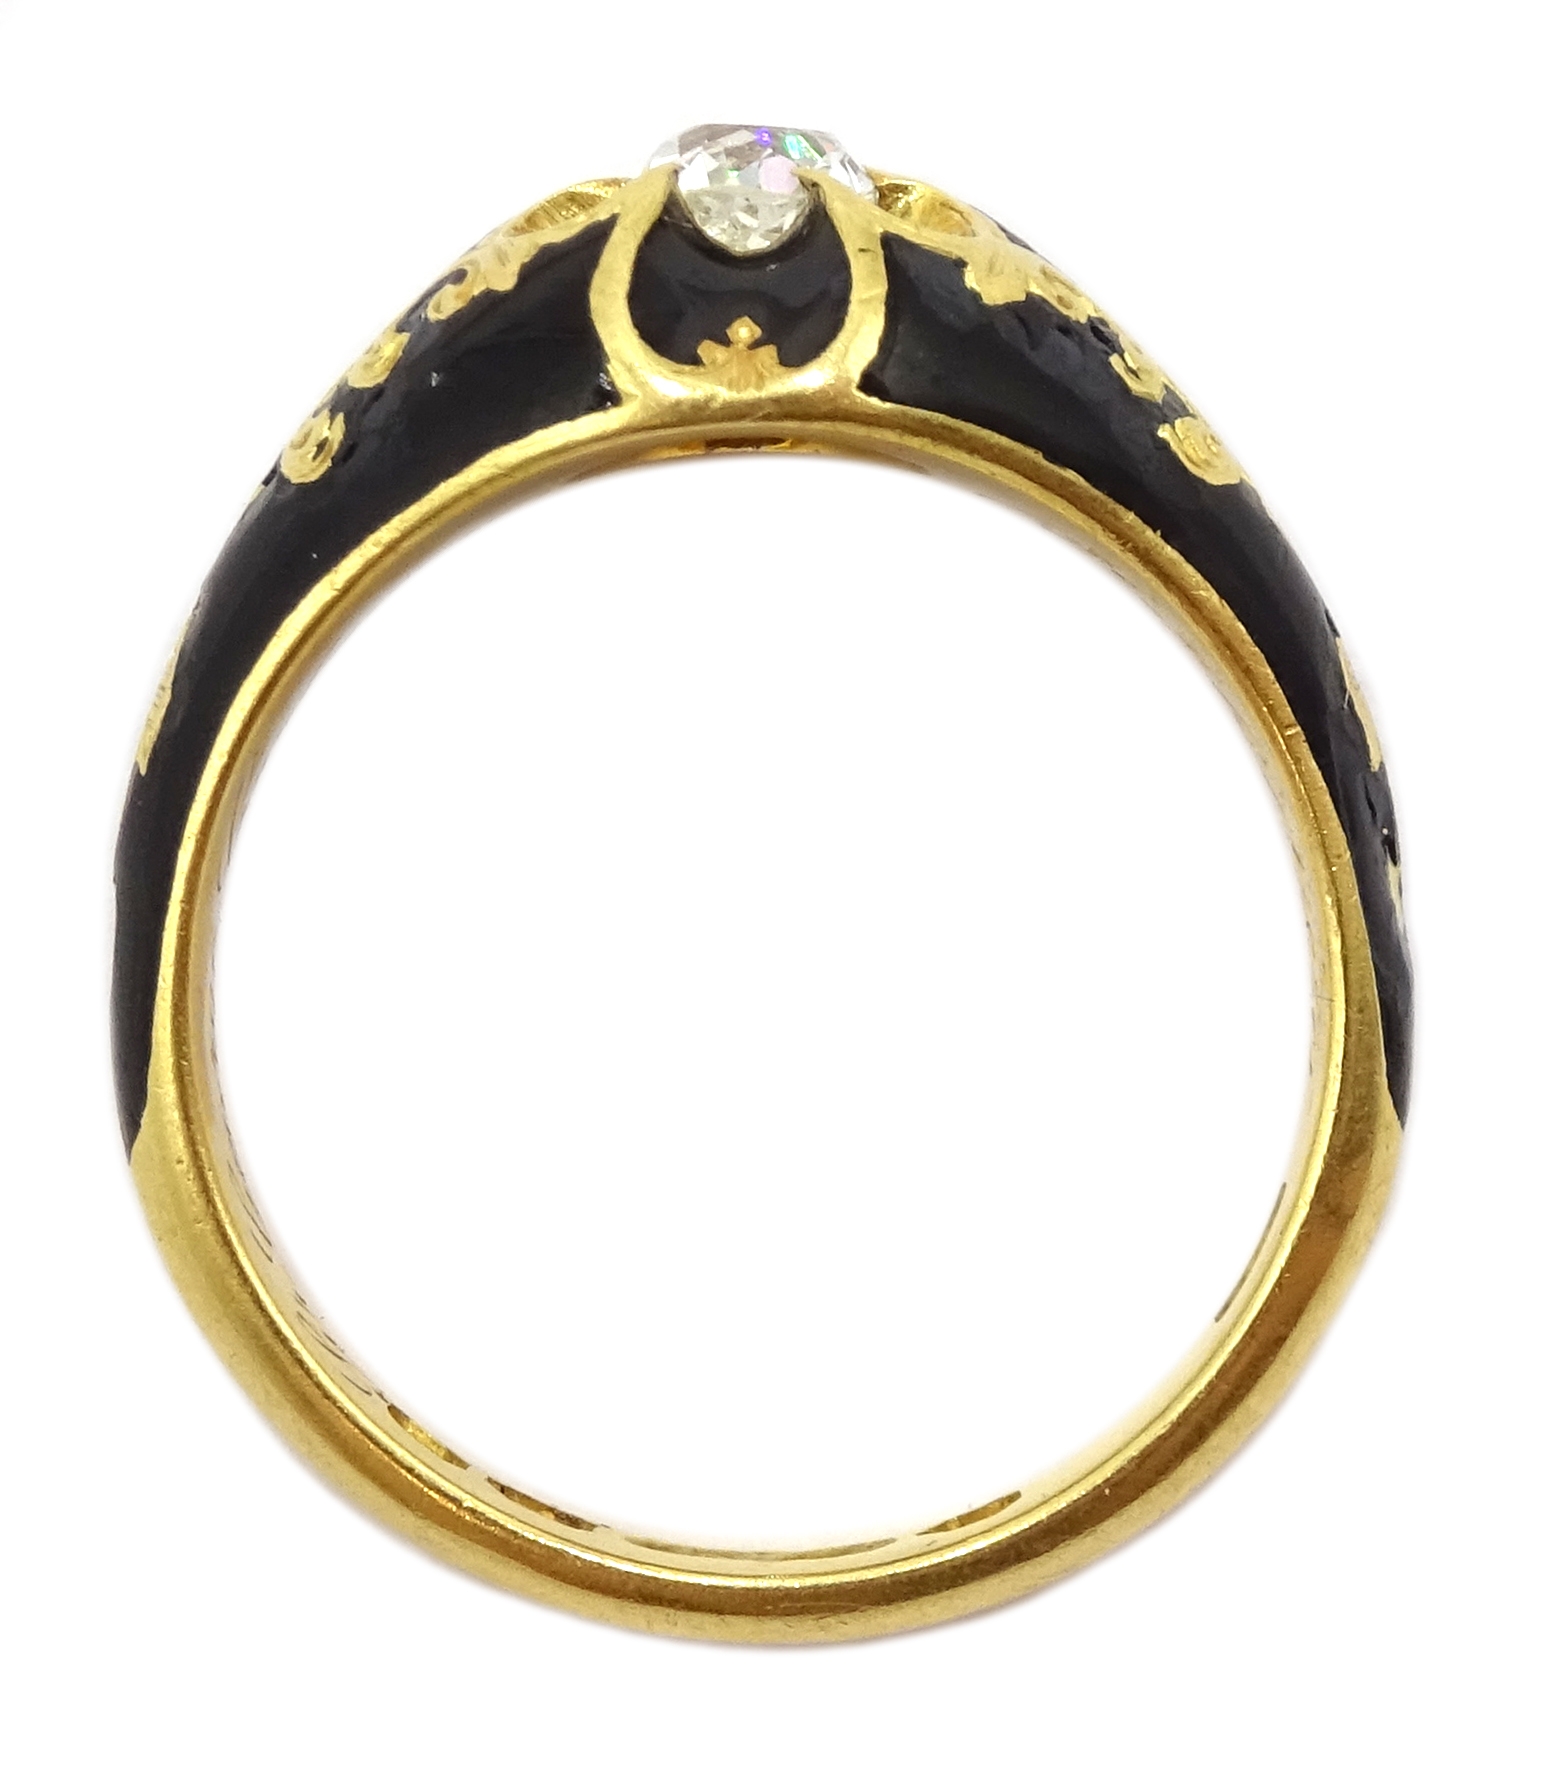 Victorian gold single stone diamond and enamel mourning ring, - Image 6 of 6